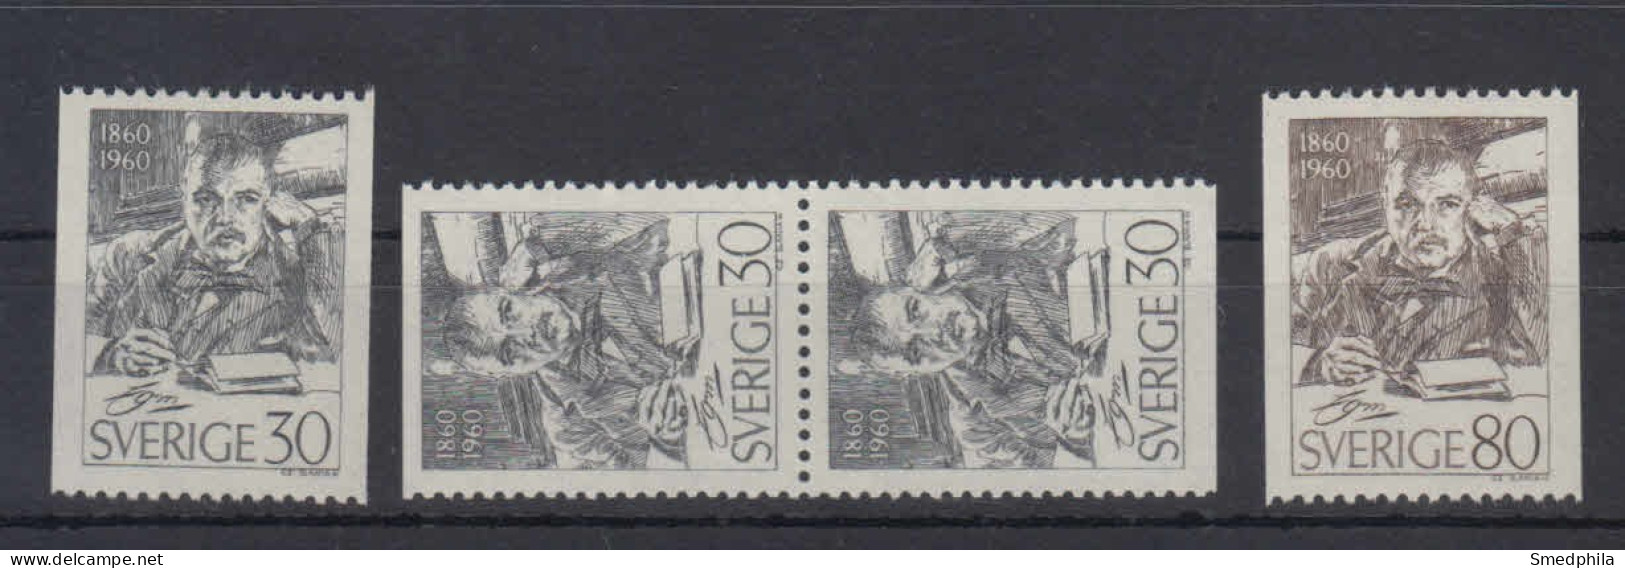 Sweden 1960 - Michel 455-456 MNH ** - Unused Stamps